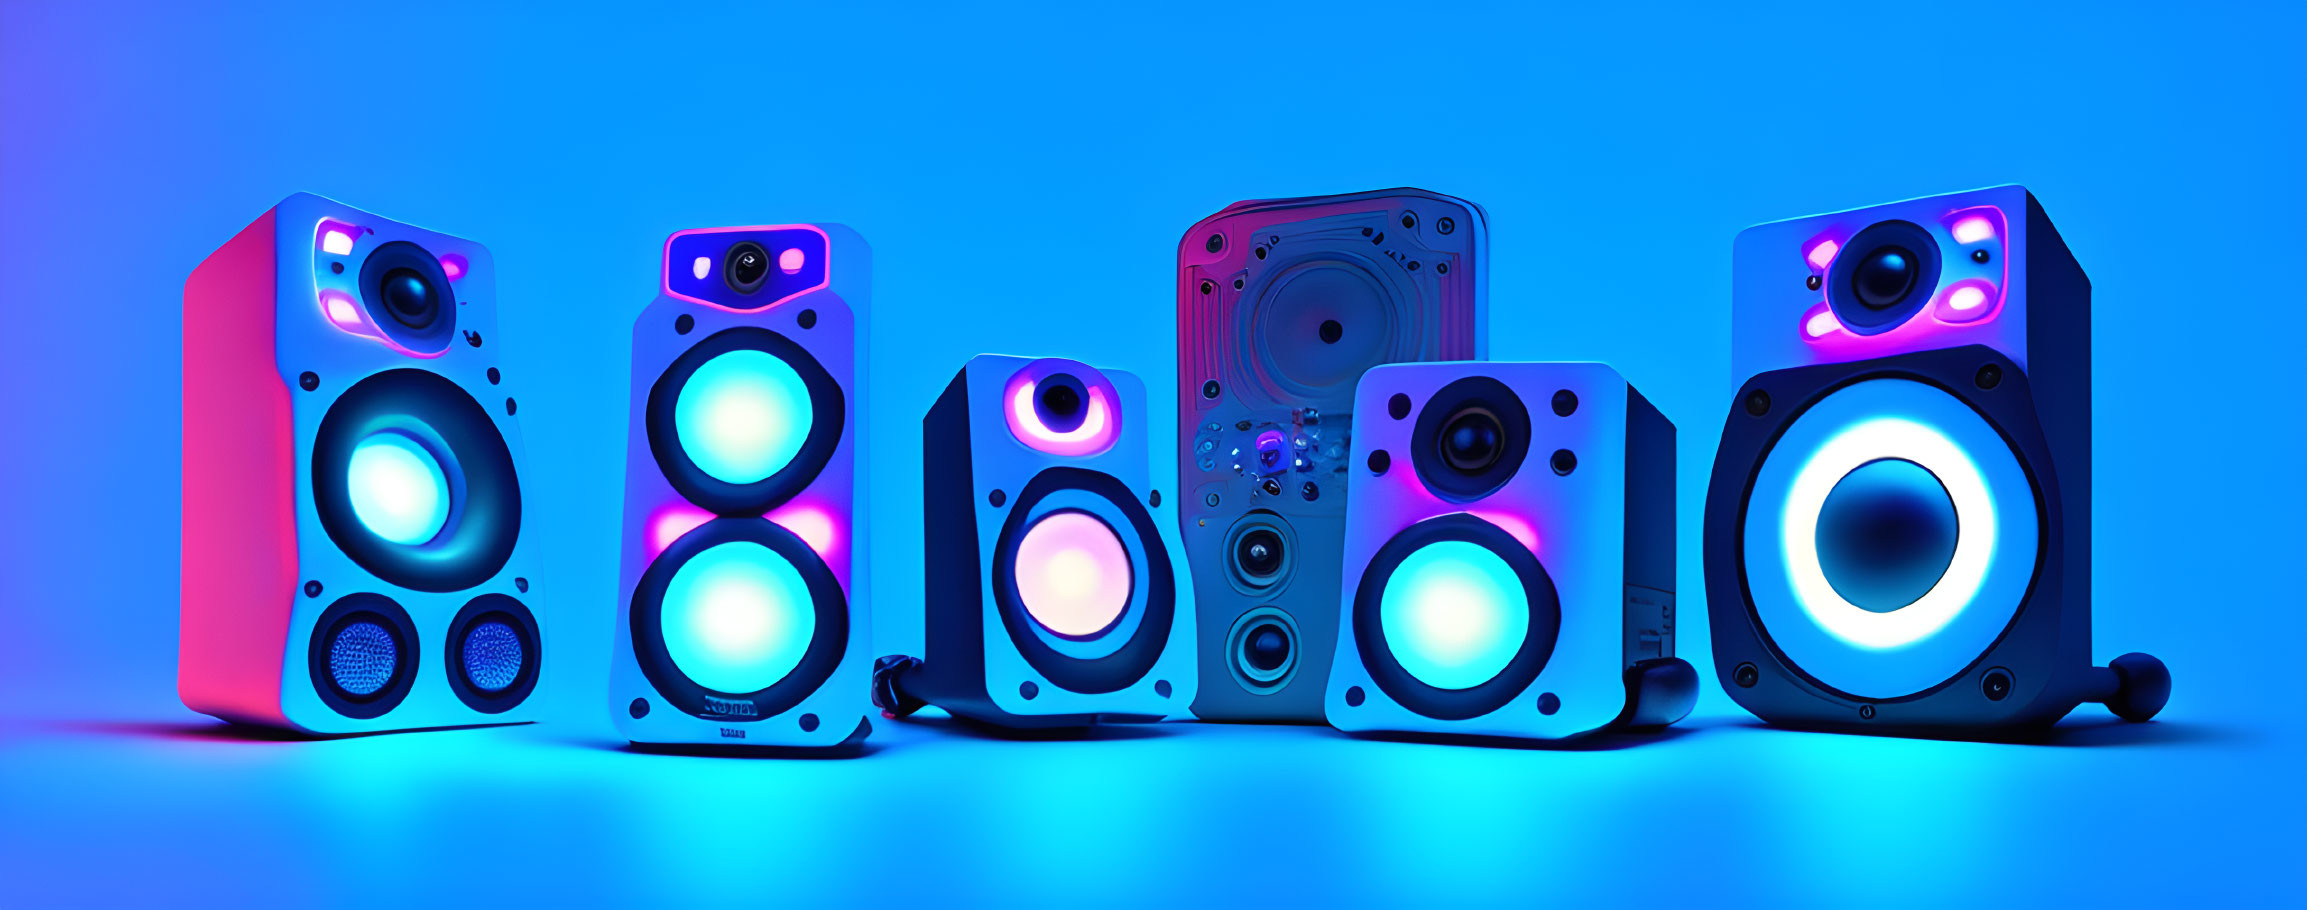 bass speakers